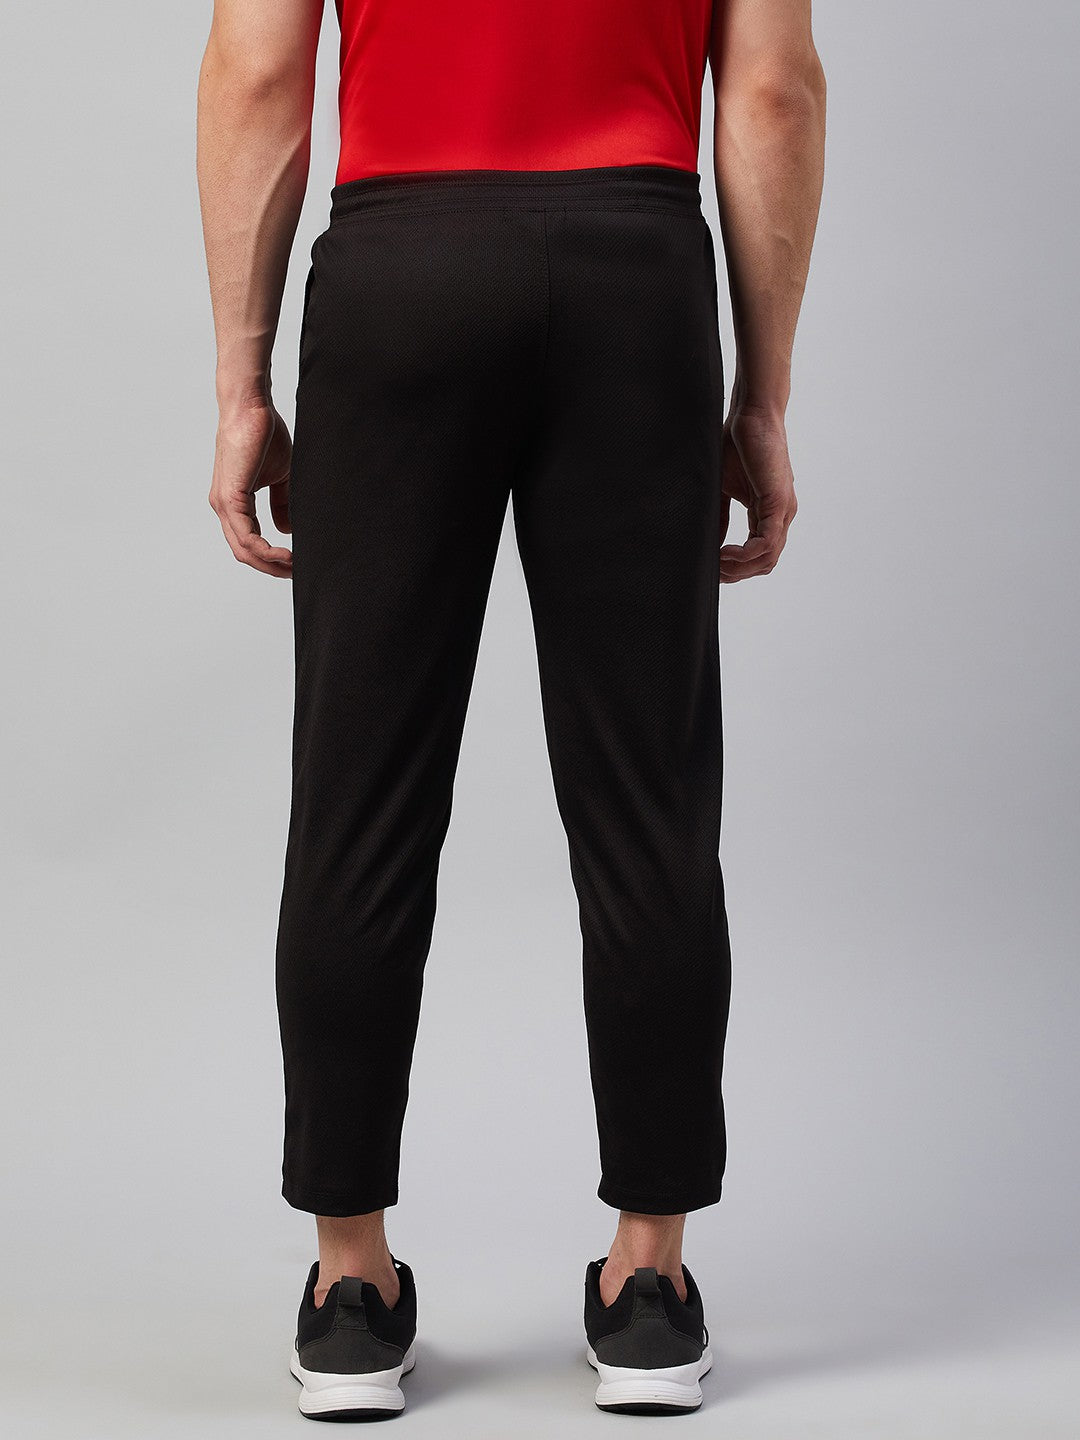 Men Printed Olive/Grey Hiking Track Pants (Pack of 2)